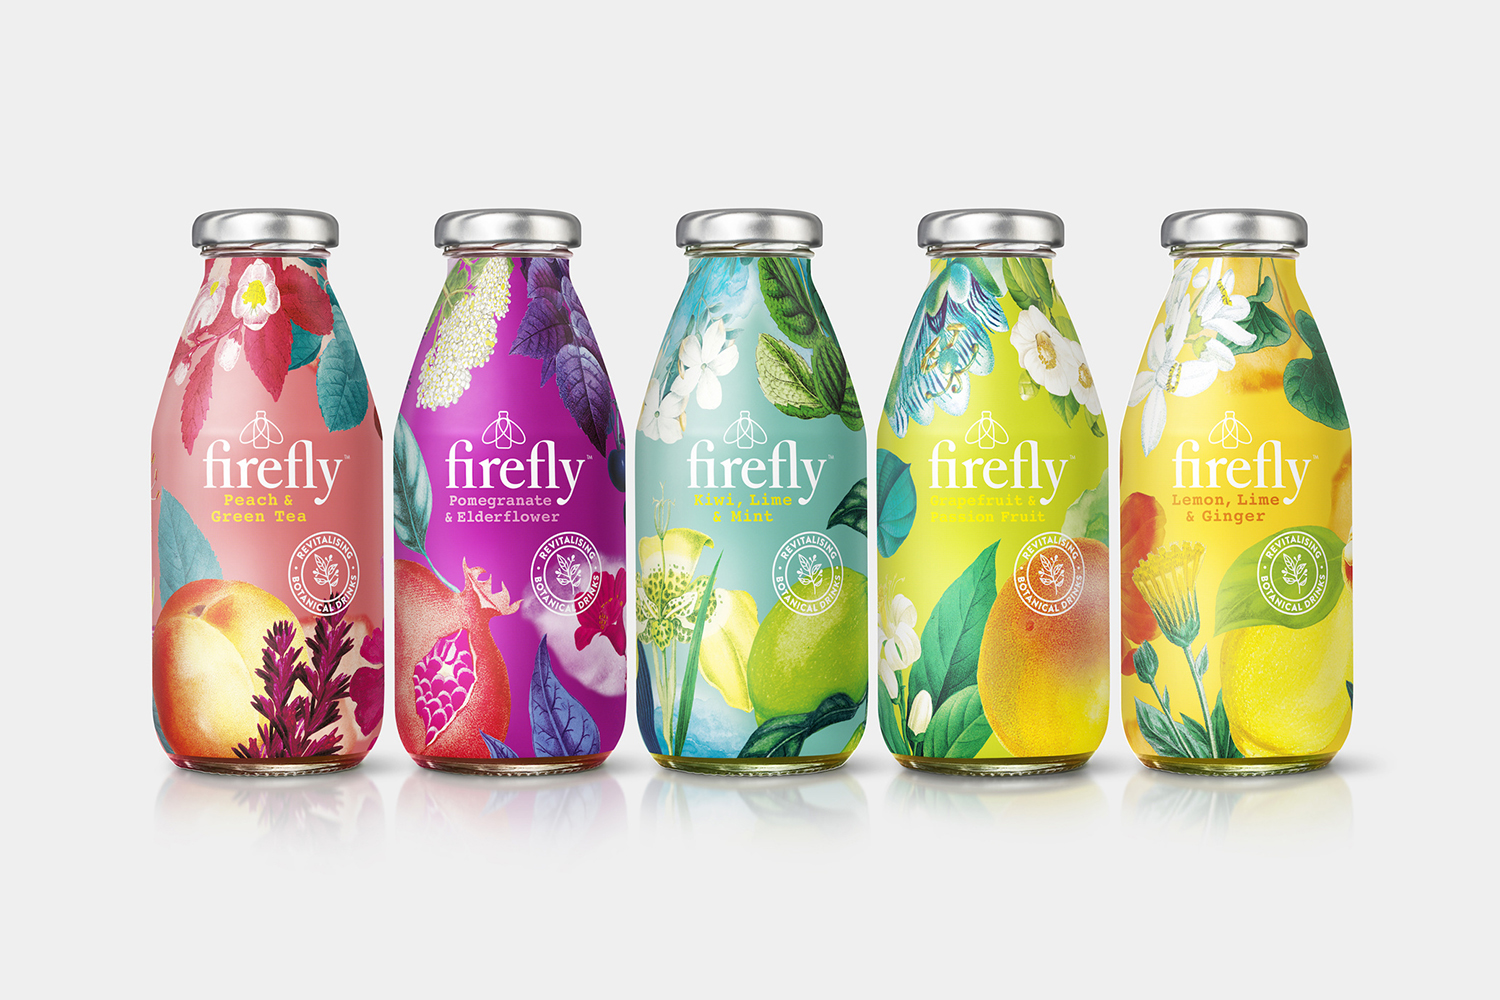 Packaging design by B&B Studio for Firefly